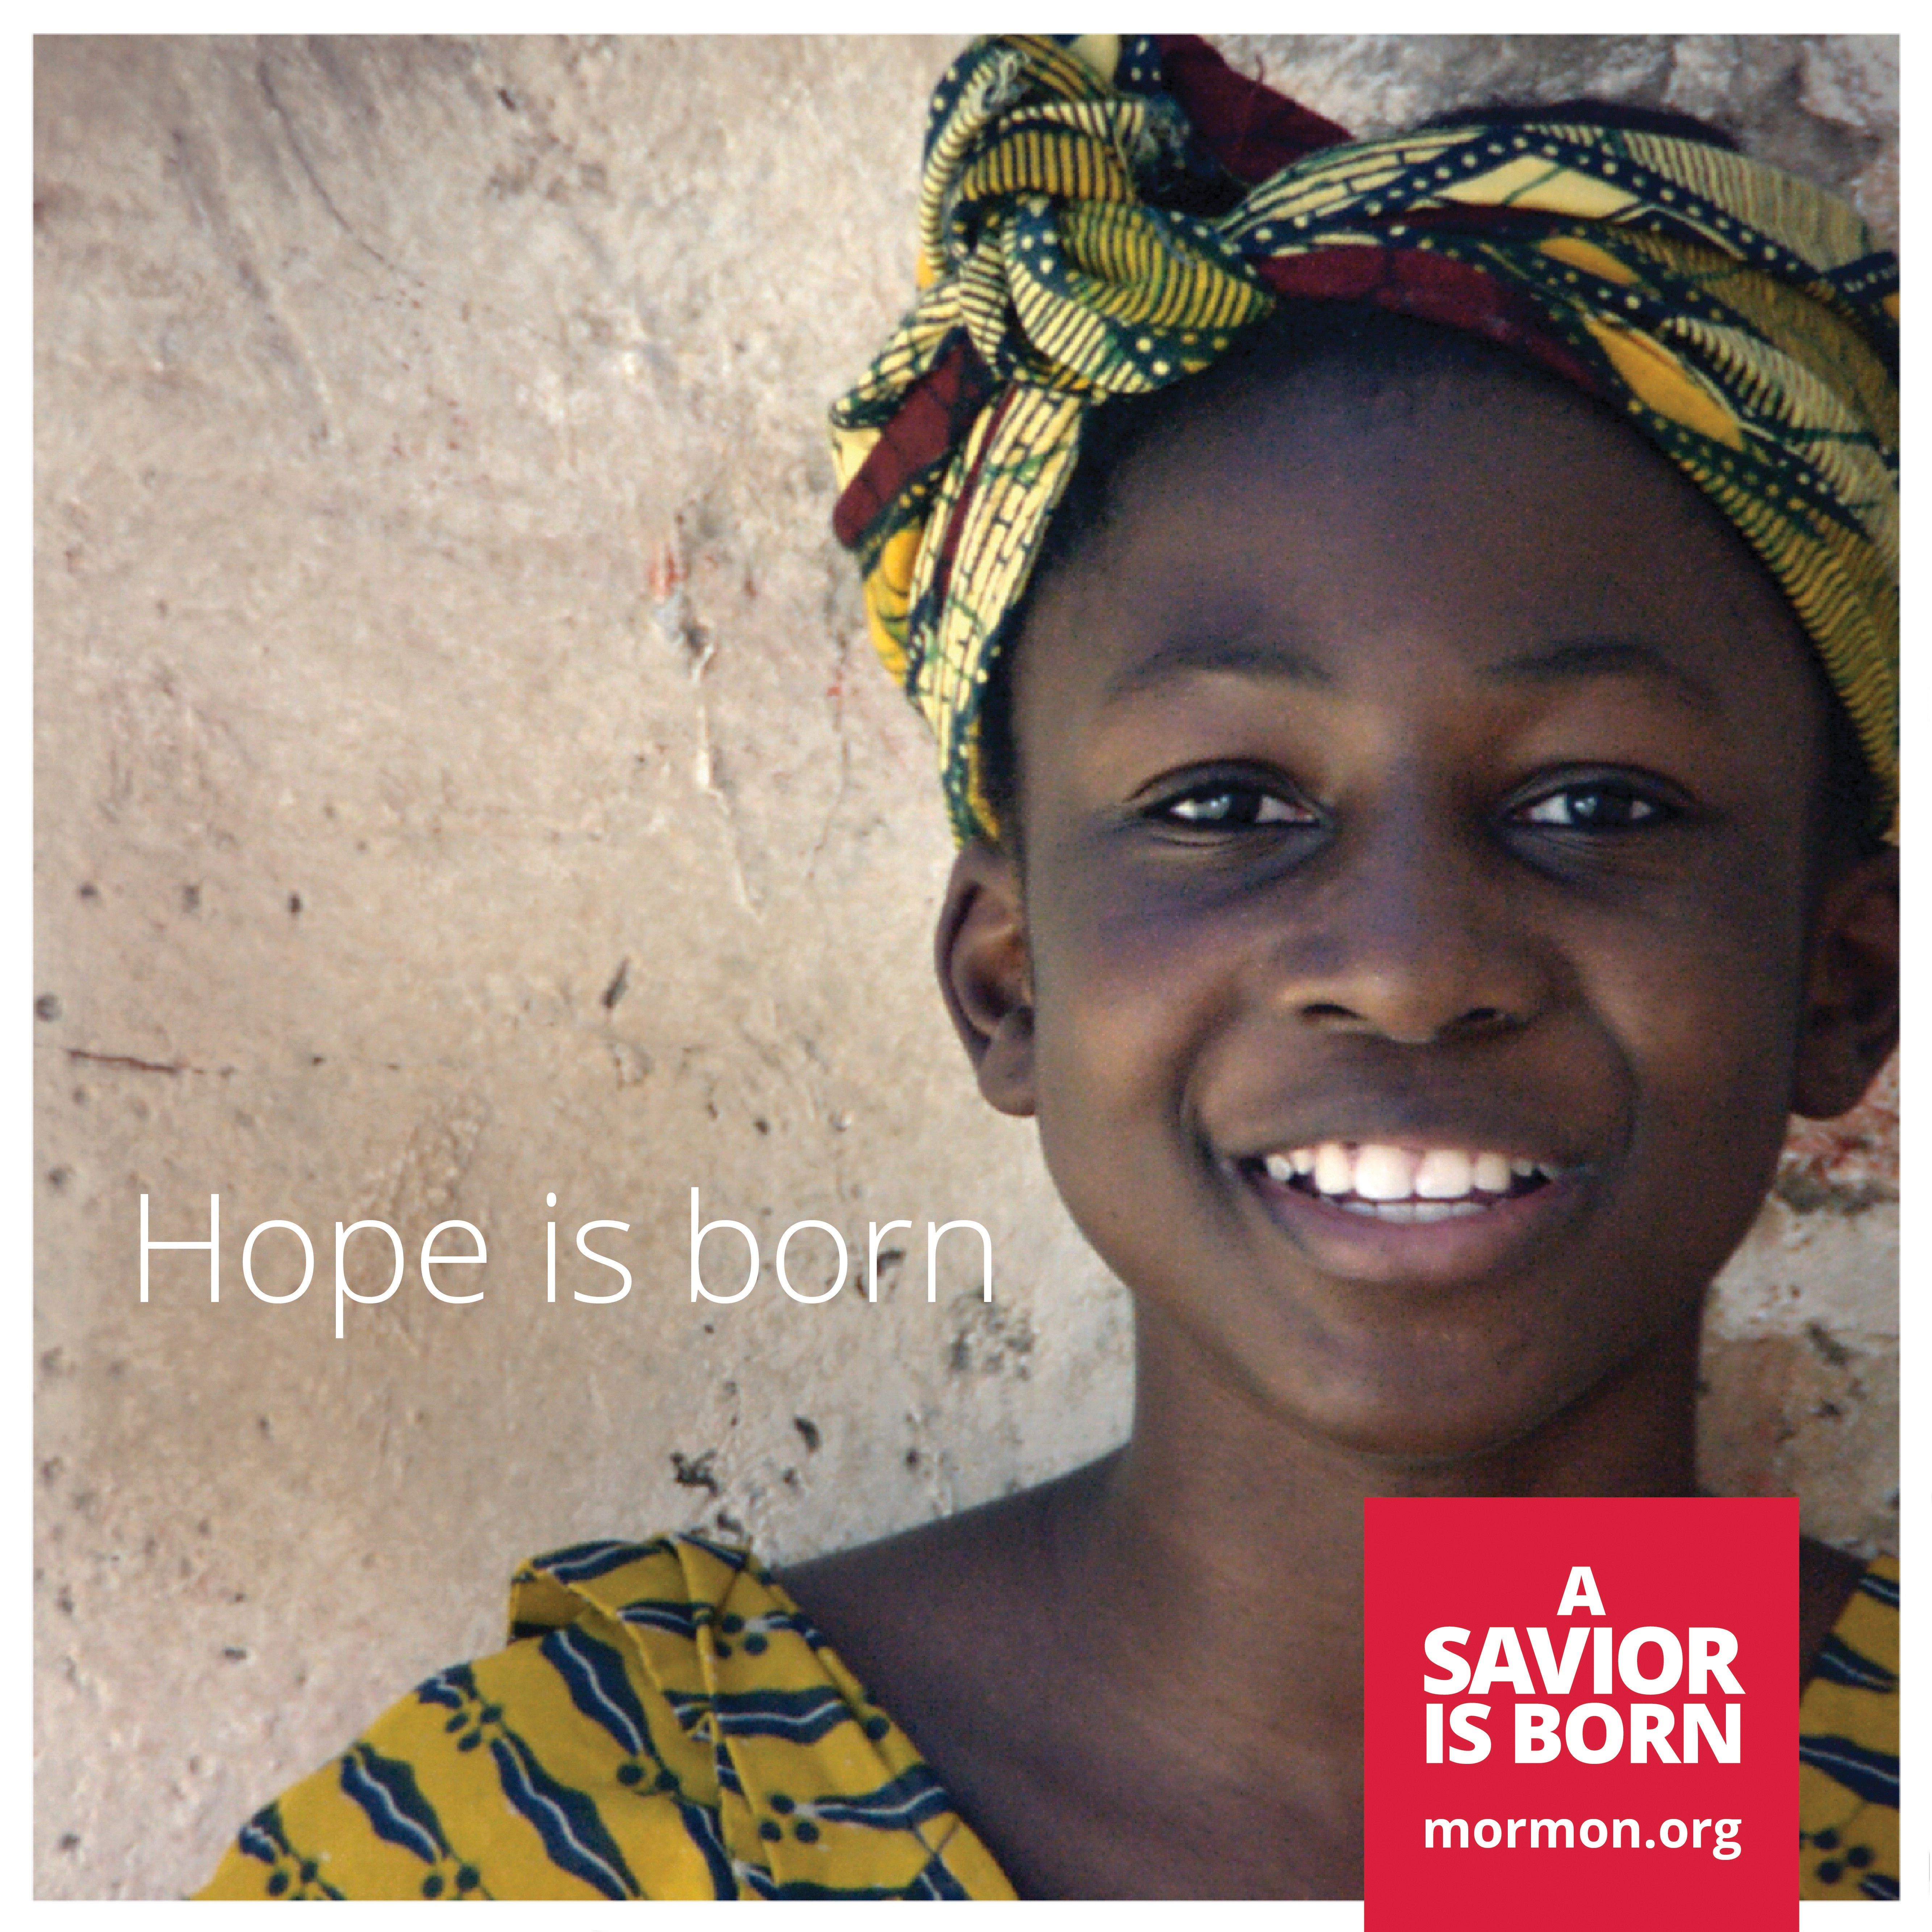 “Hope is born.” —mormon.org, “A Savior Is Born”